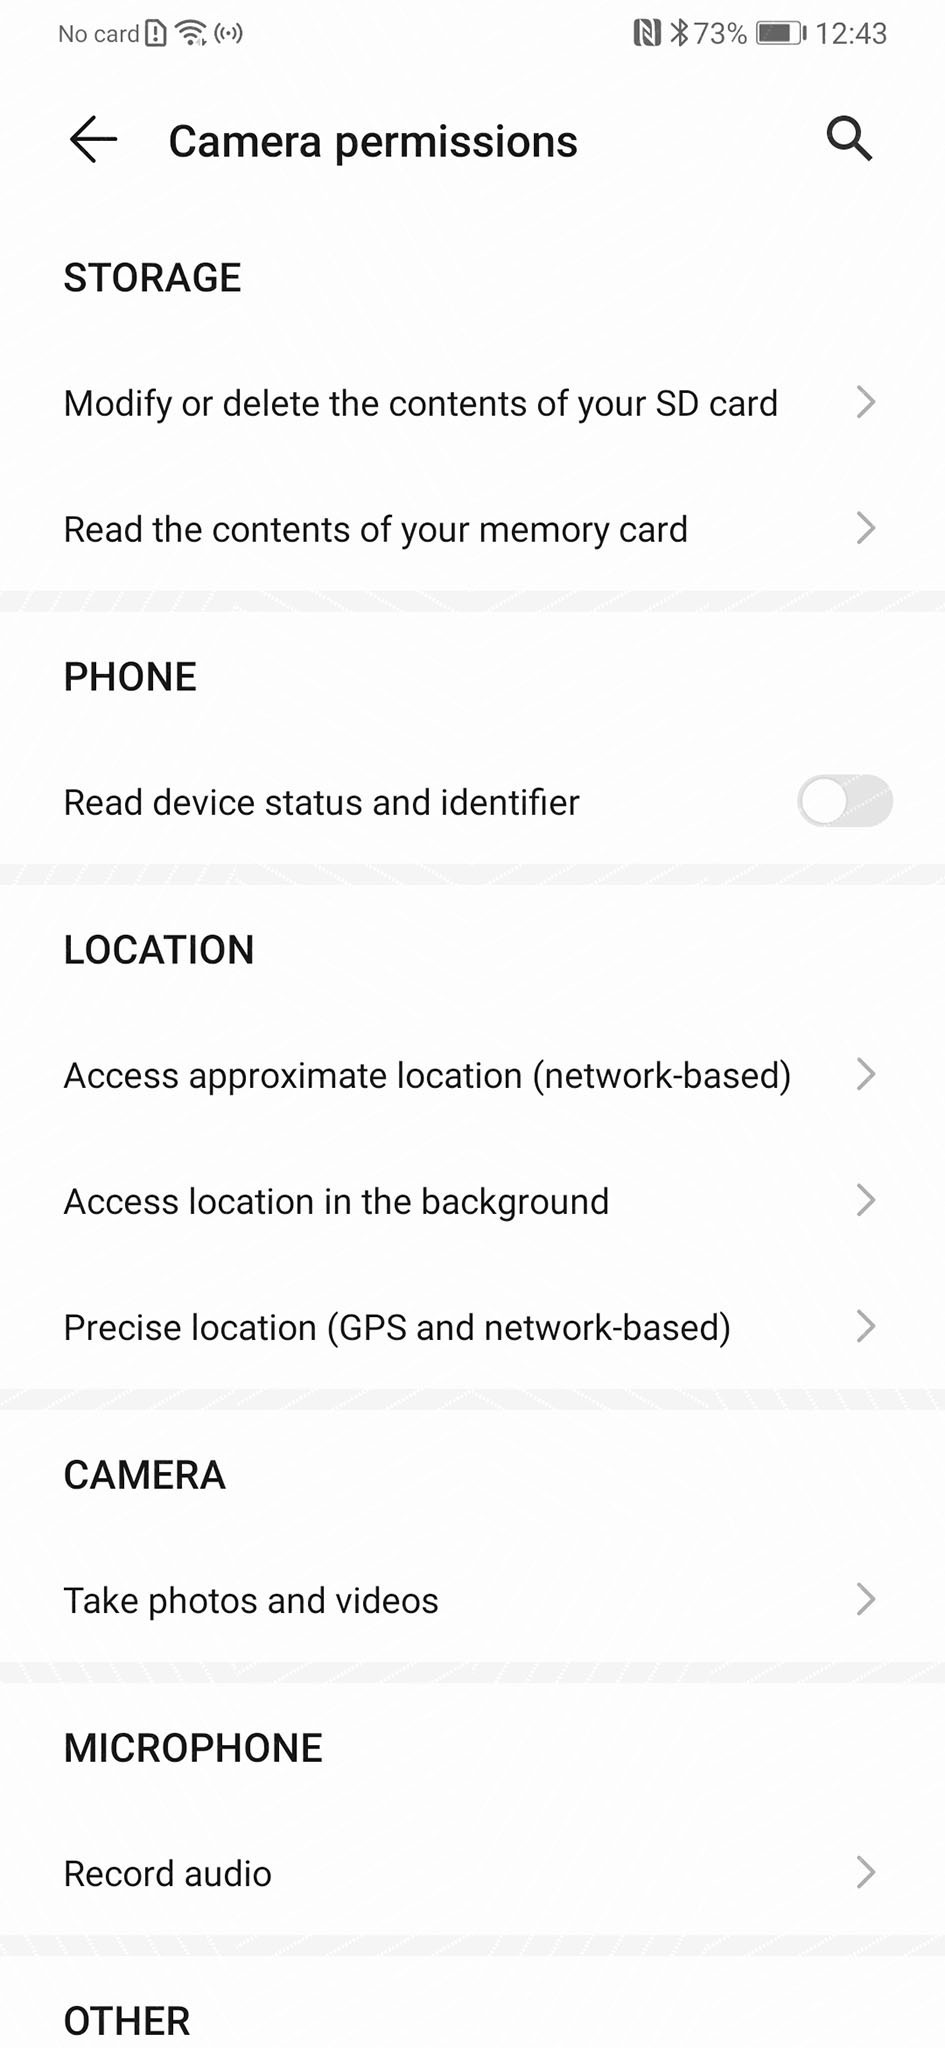 Android Q Emui 10 Tasarimi Ortaya Cikti Shiftdelete Net